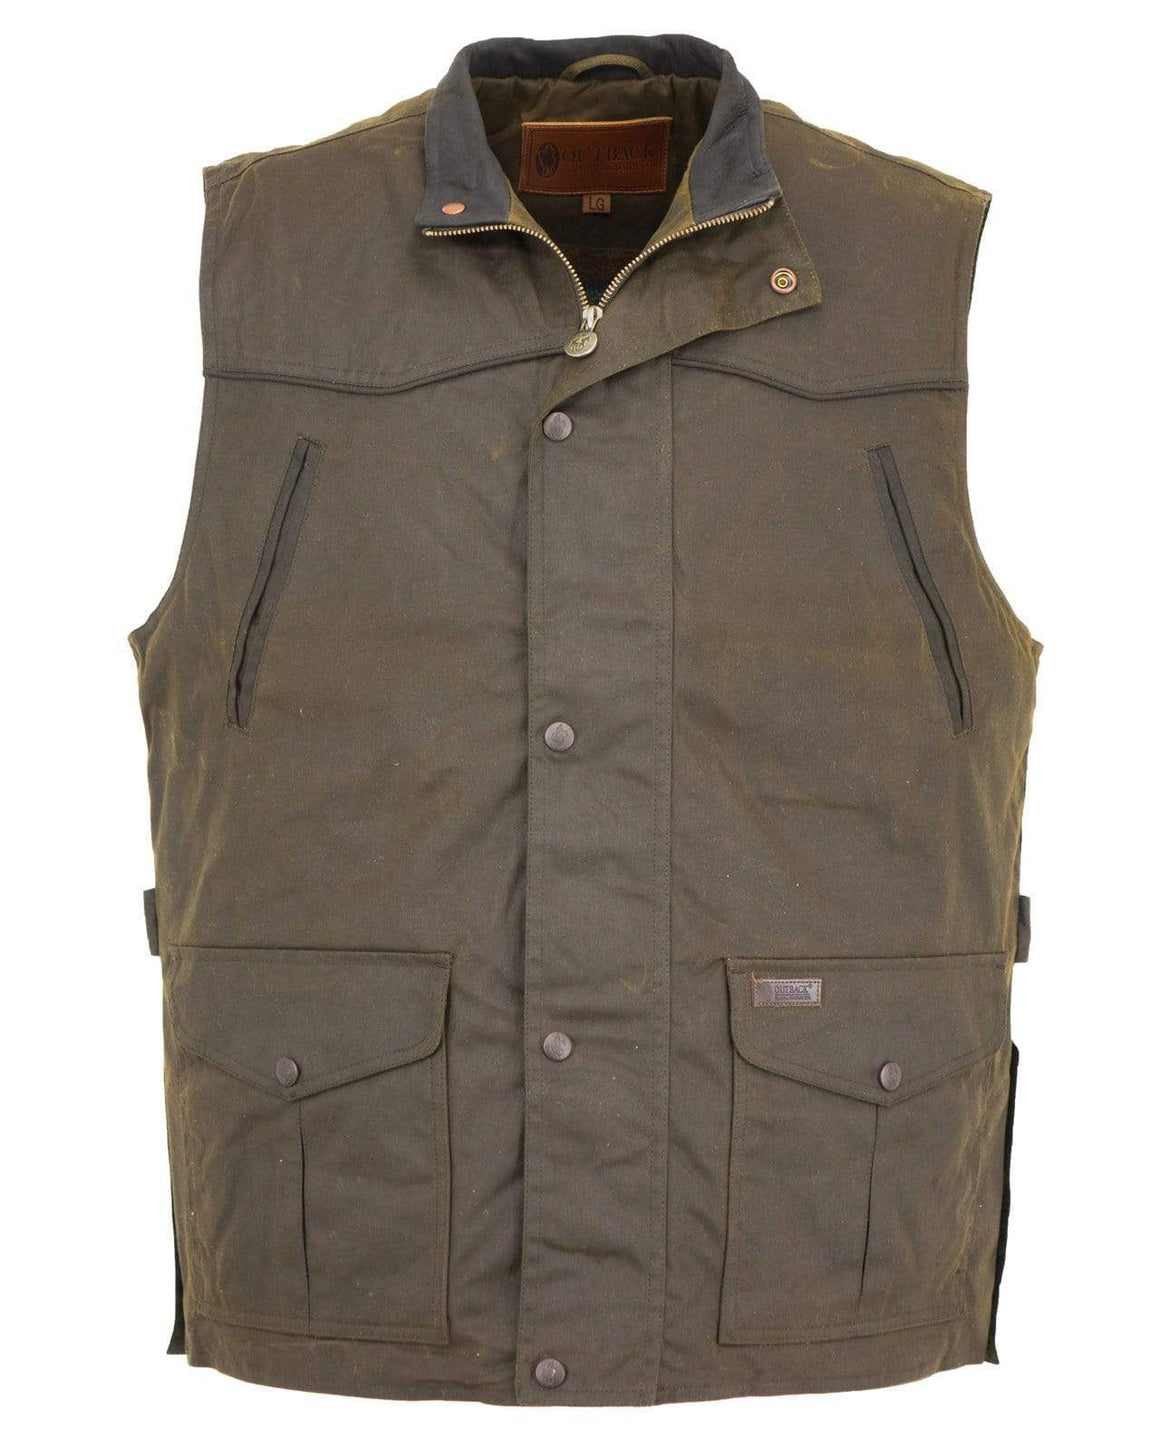 Men’s Magnum Vest | Vests by Outback Trading Company | OutbackTrading.com